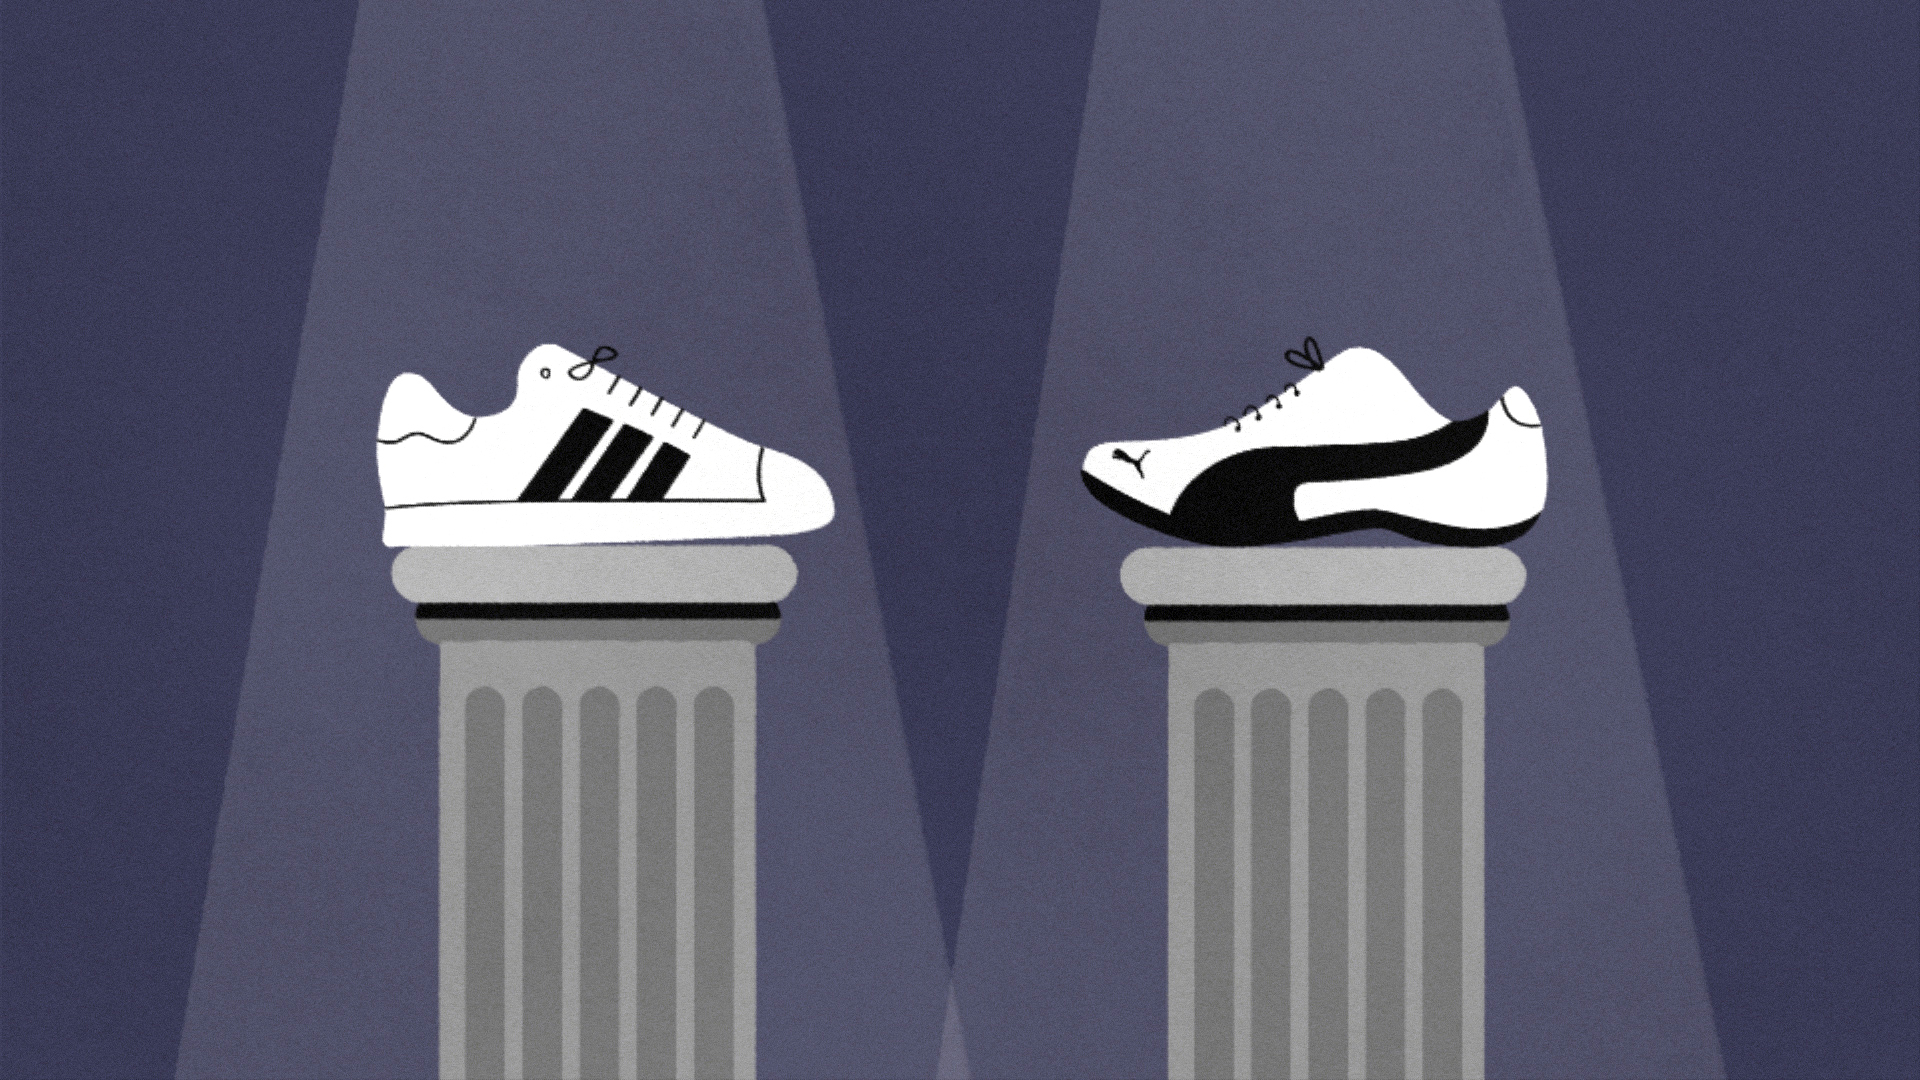 The sibling rivalry behind Adidas 